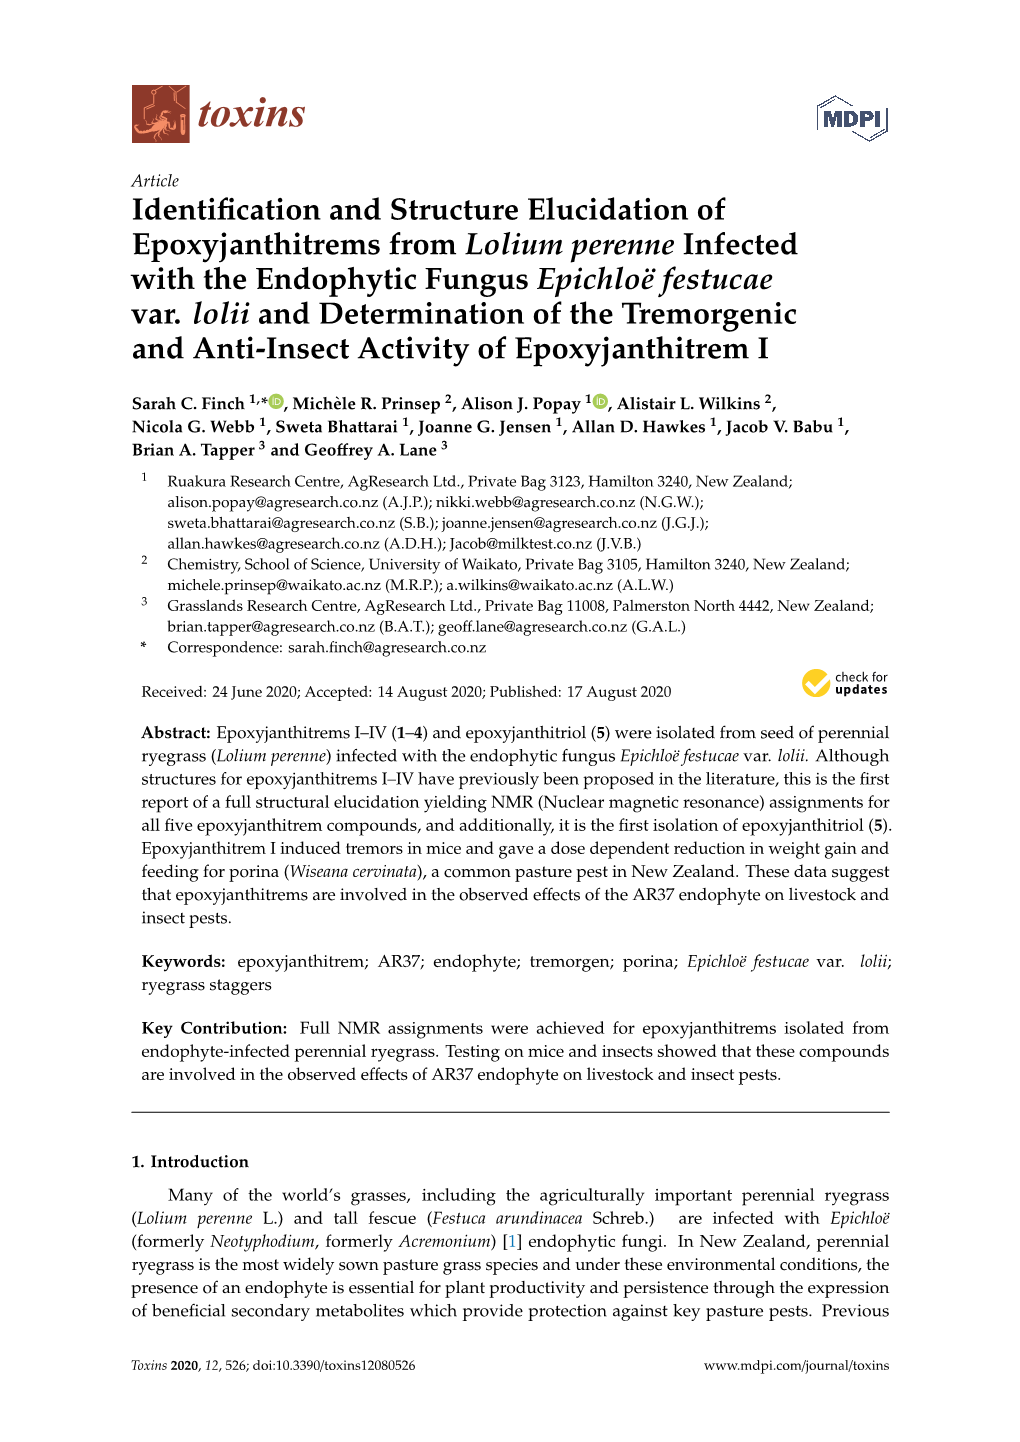 Identification and Structure Elucidation of Epoxyjanthitrems from Lolium